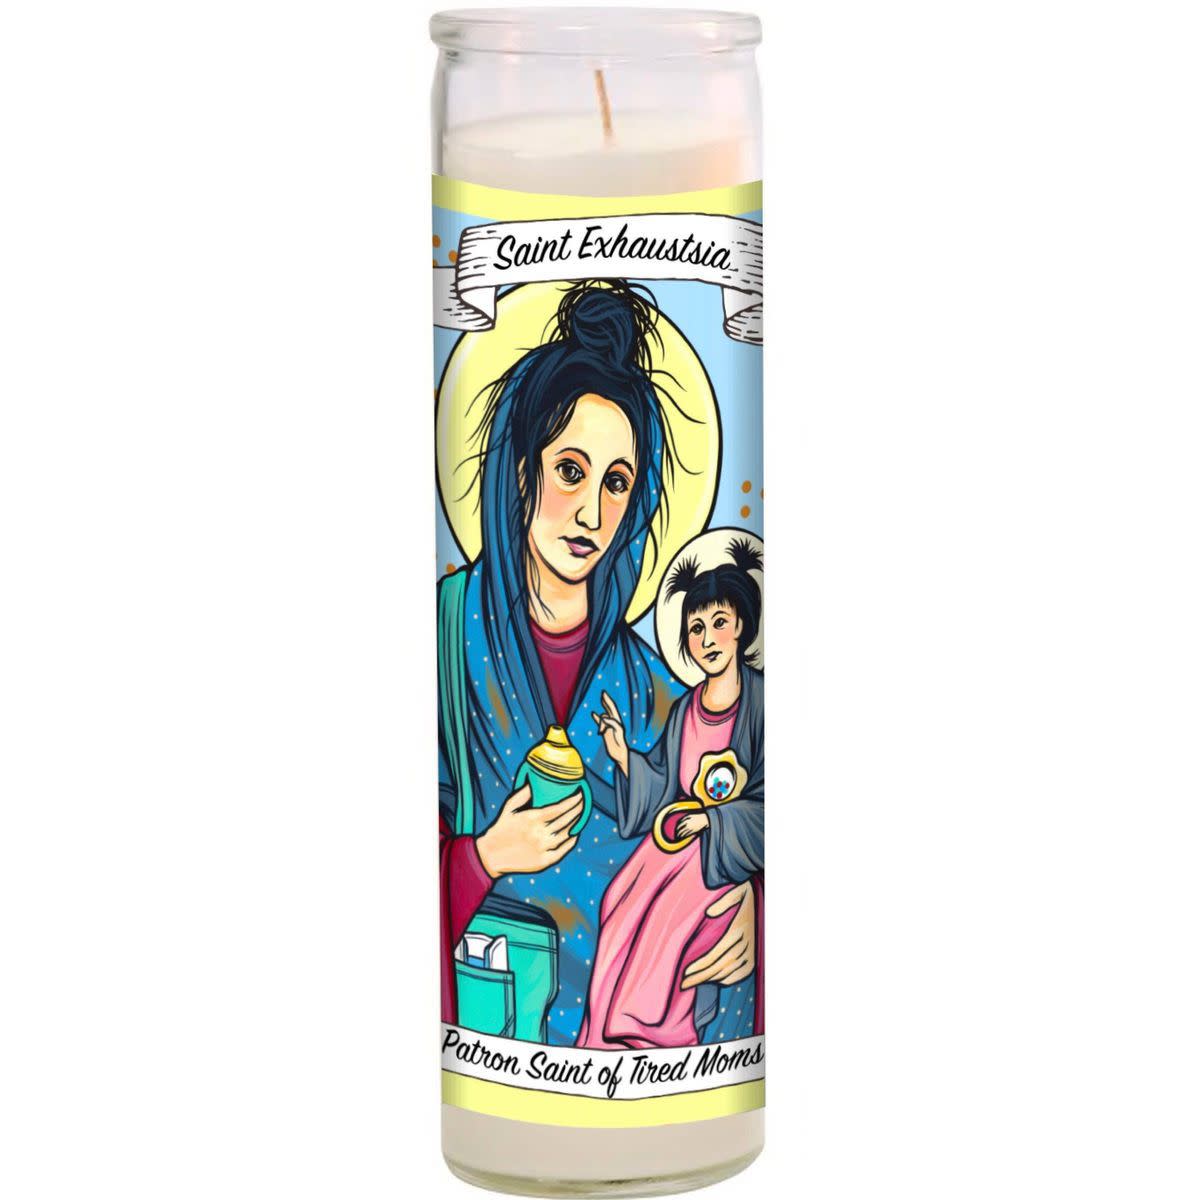 Saint Exhaustia Candle